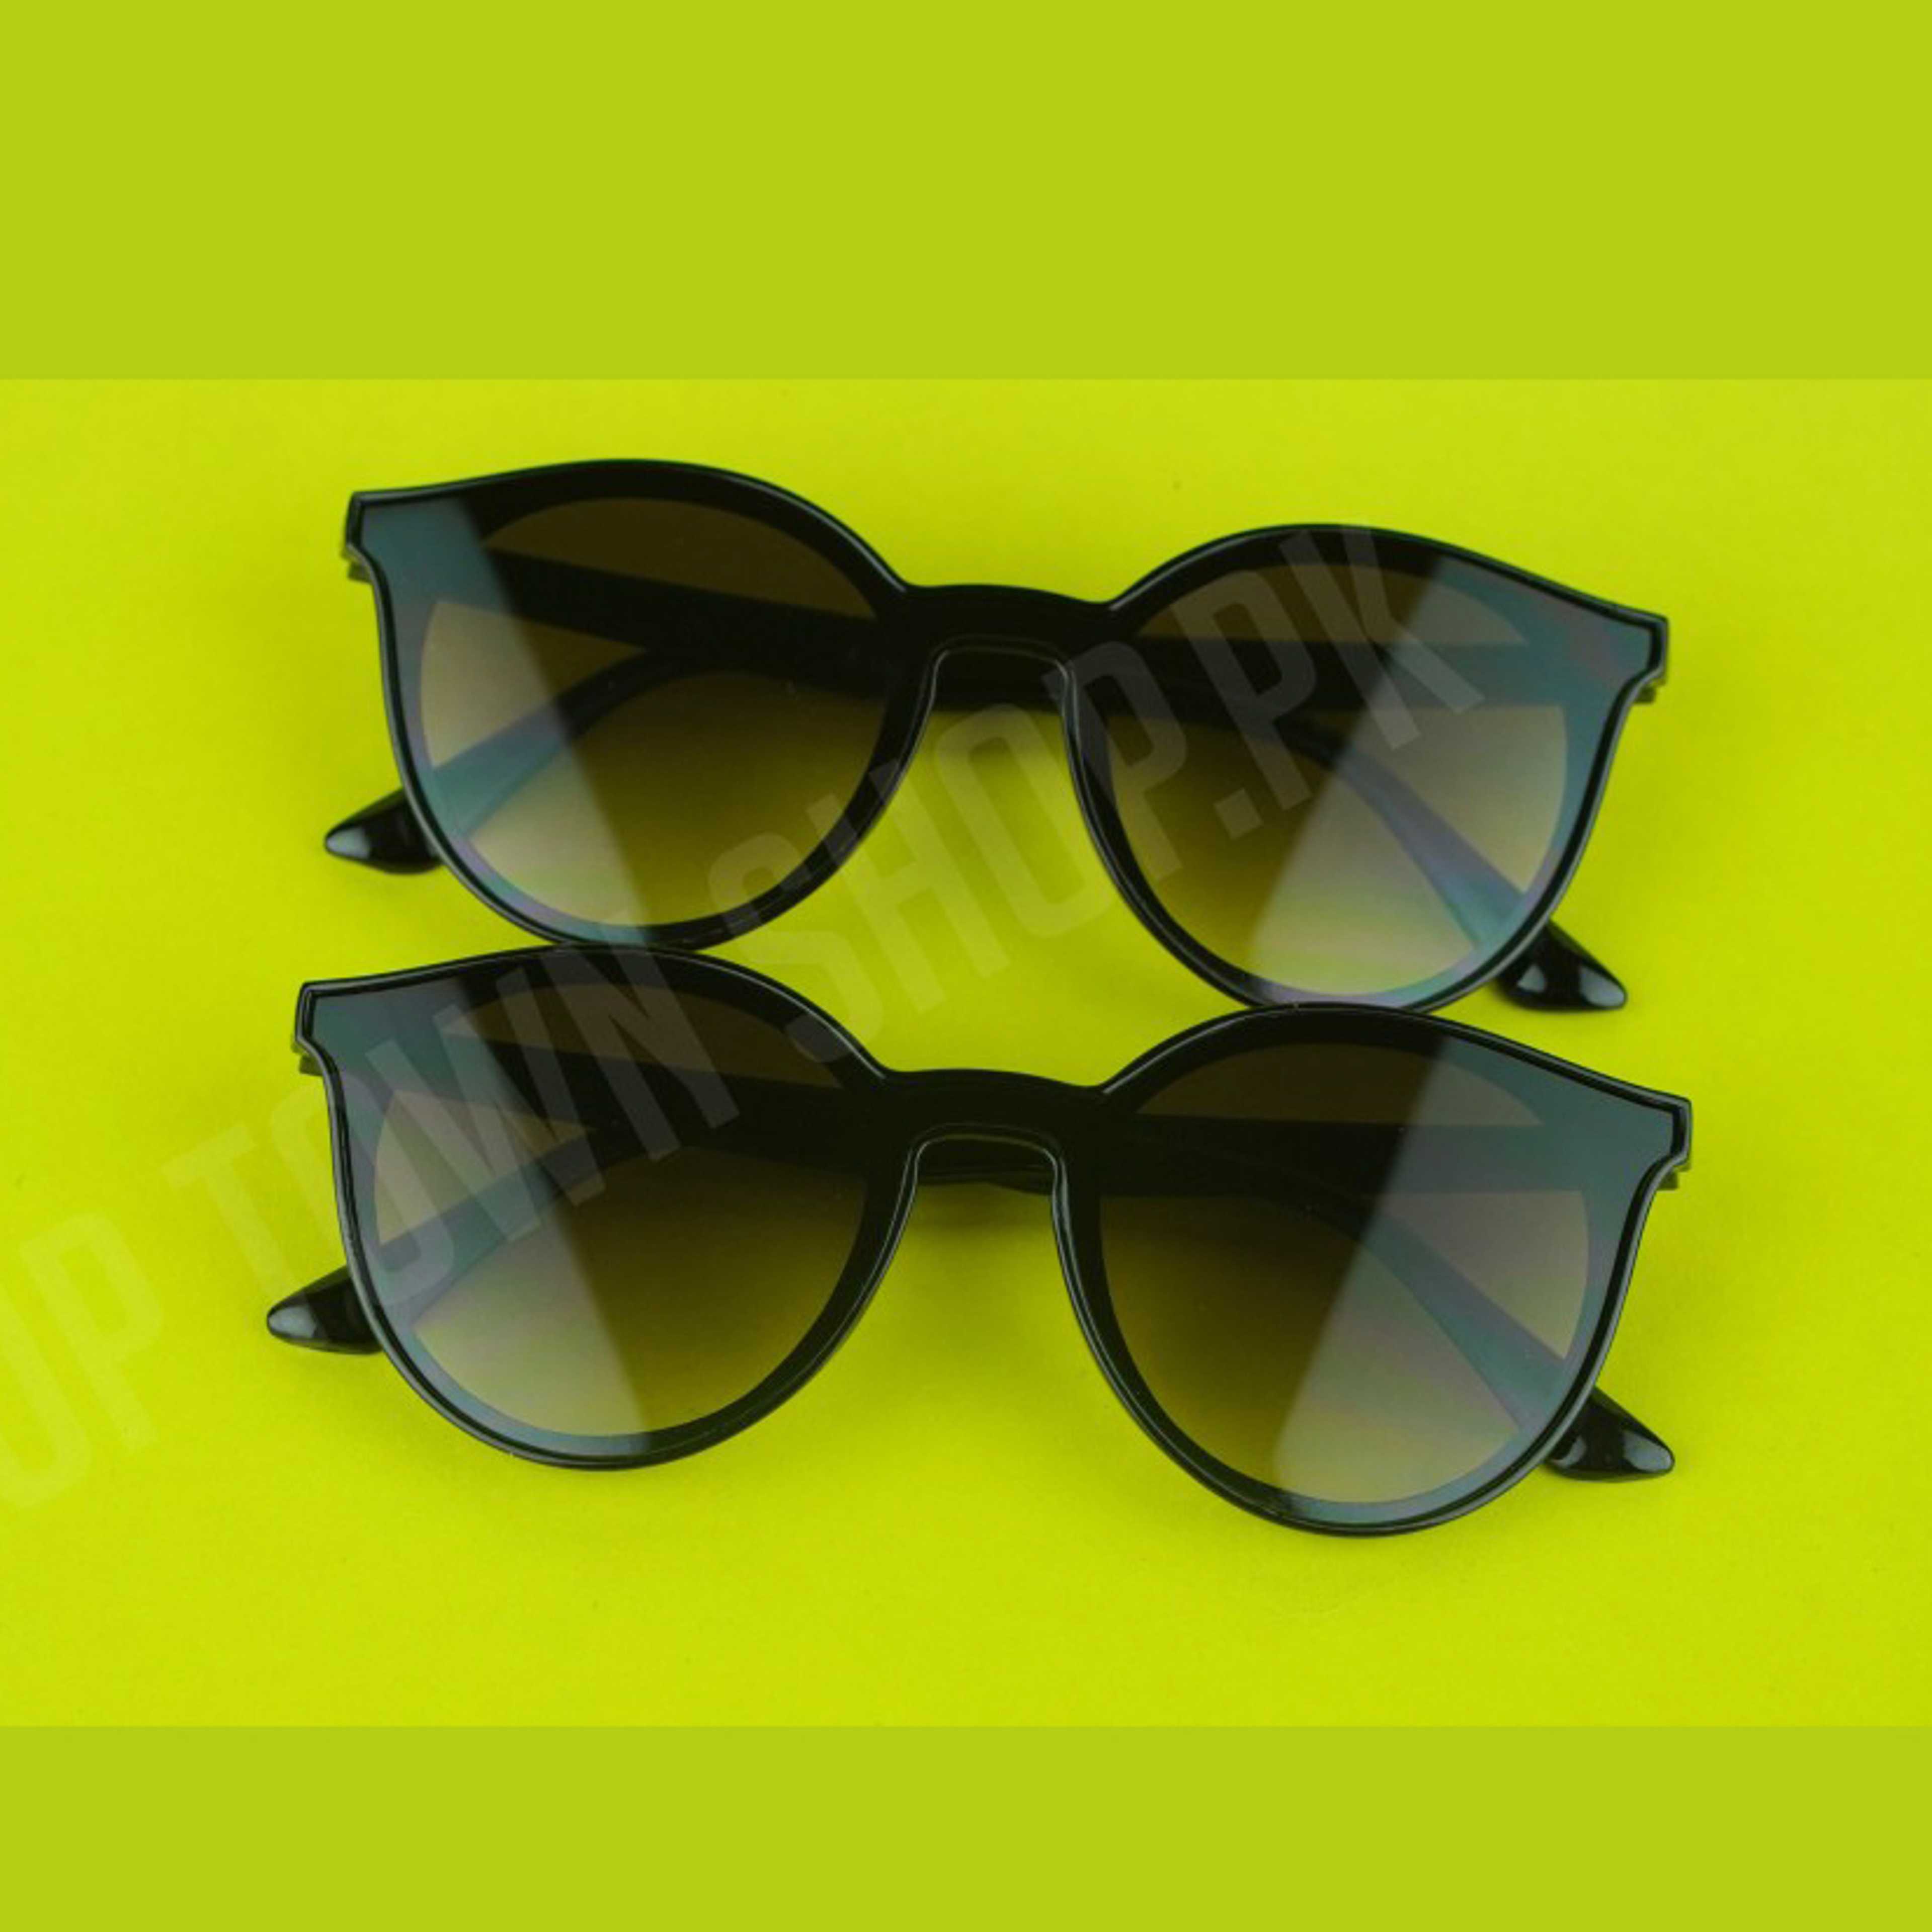 Black Cat Style Unisex Glasses